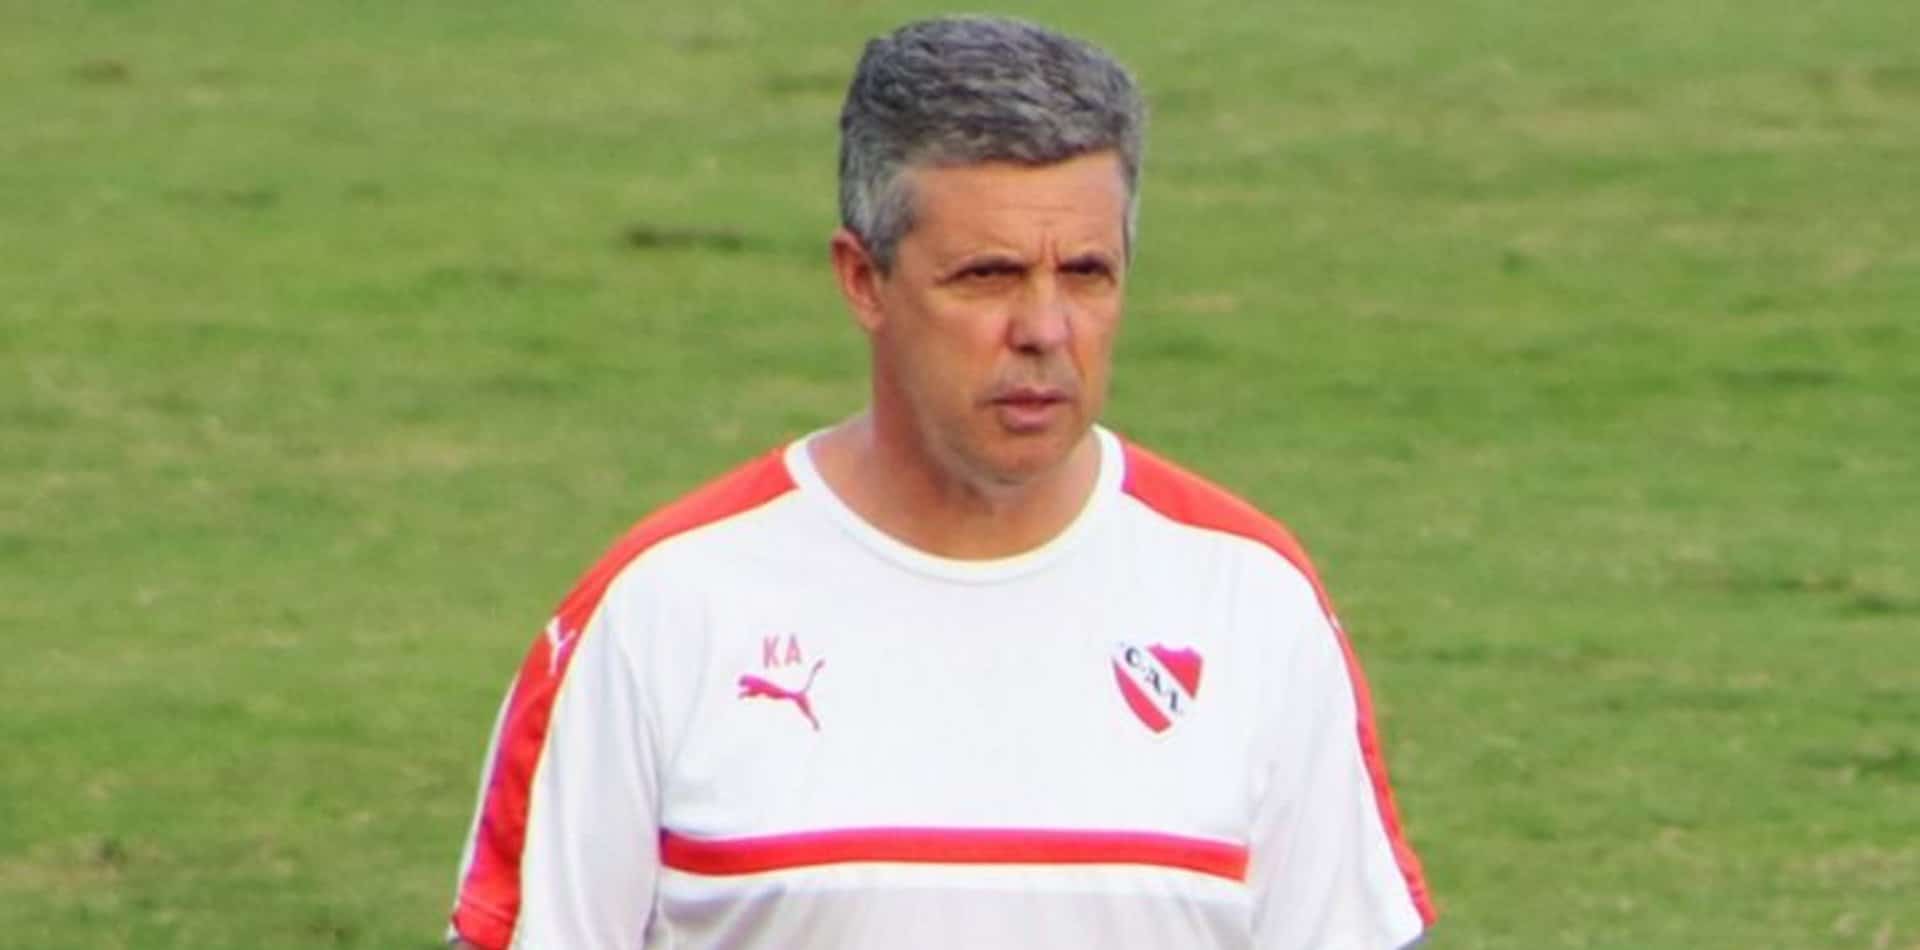 Alejandro Kohan